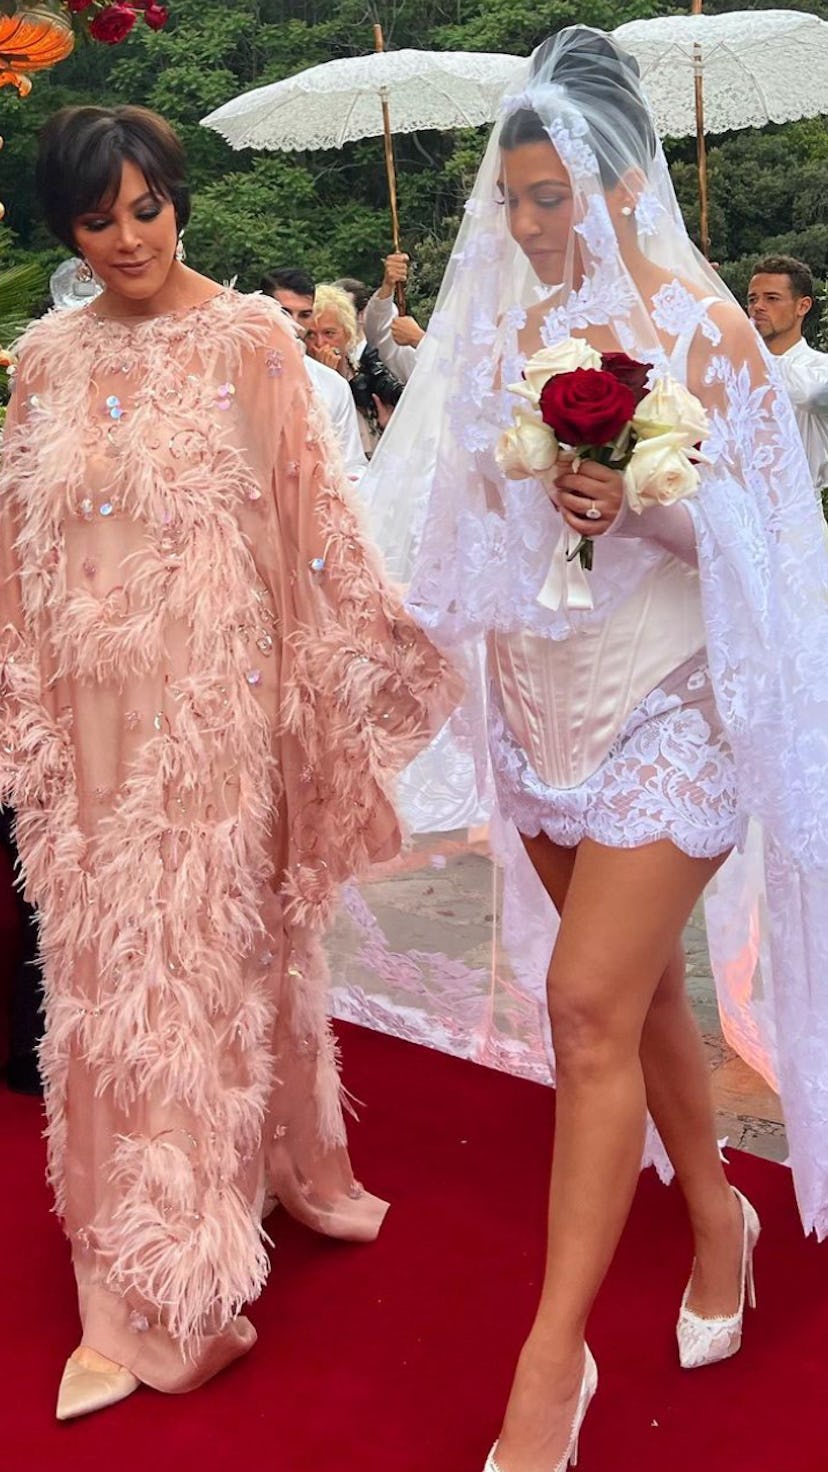 Kourtney Kardashian in a wedding dress walking with her mother Kris Jenner